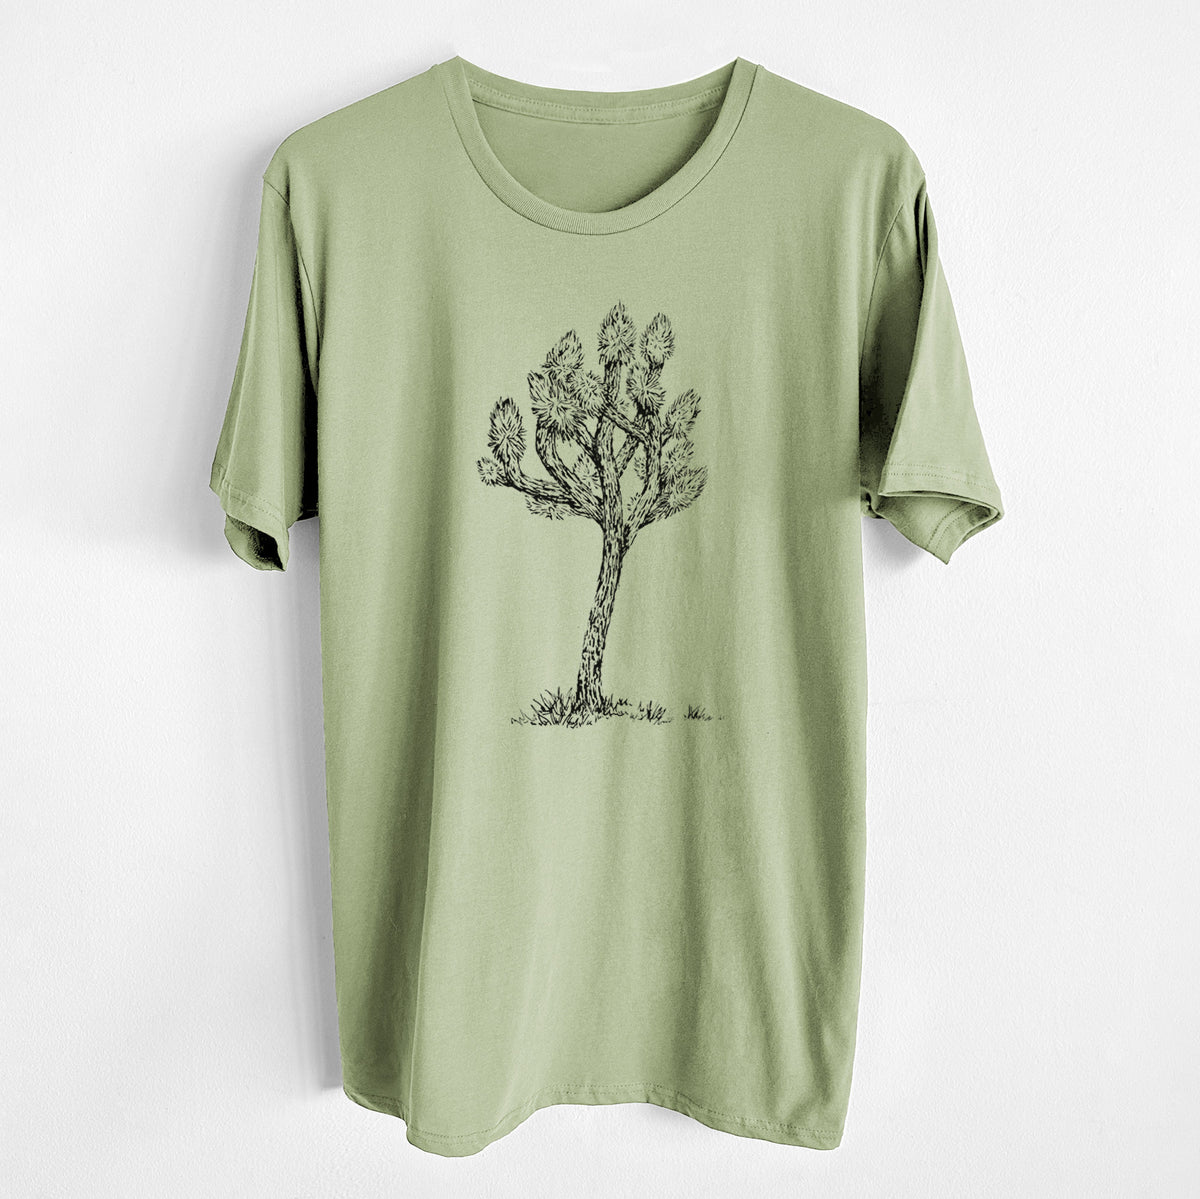 Yucca brevifolia - Joshua Tree - Unisex Crewneck - Made in USA - 100% Organic Cotton